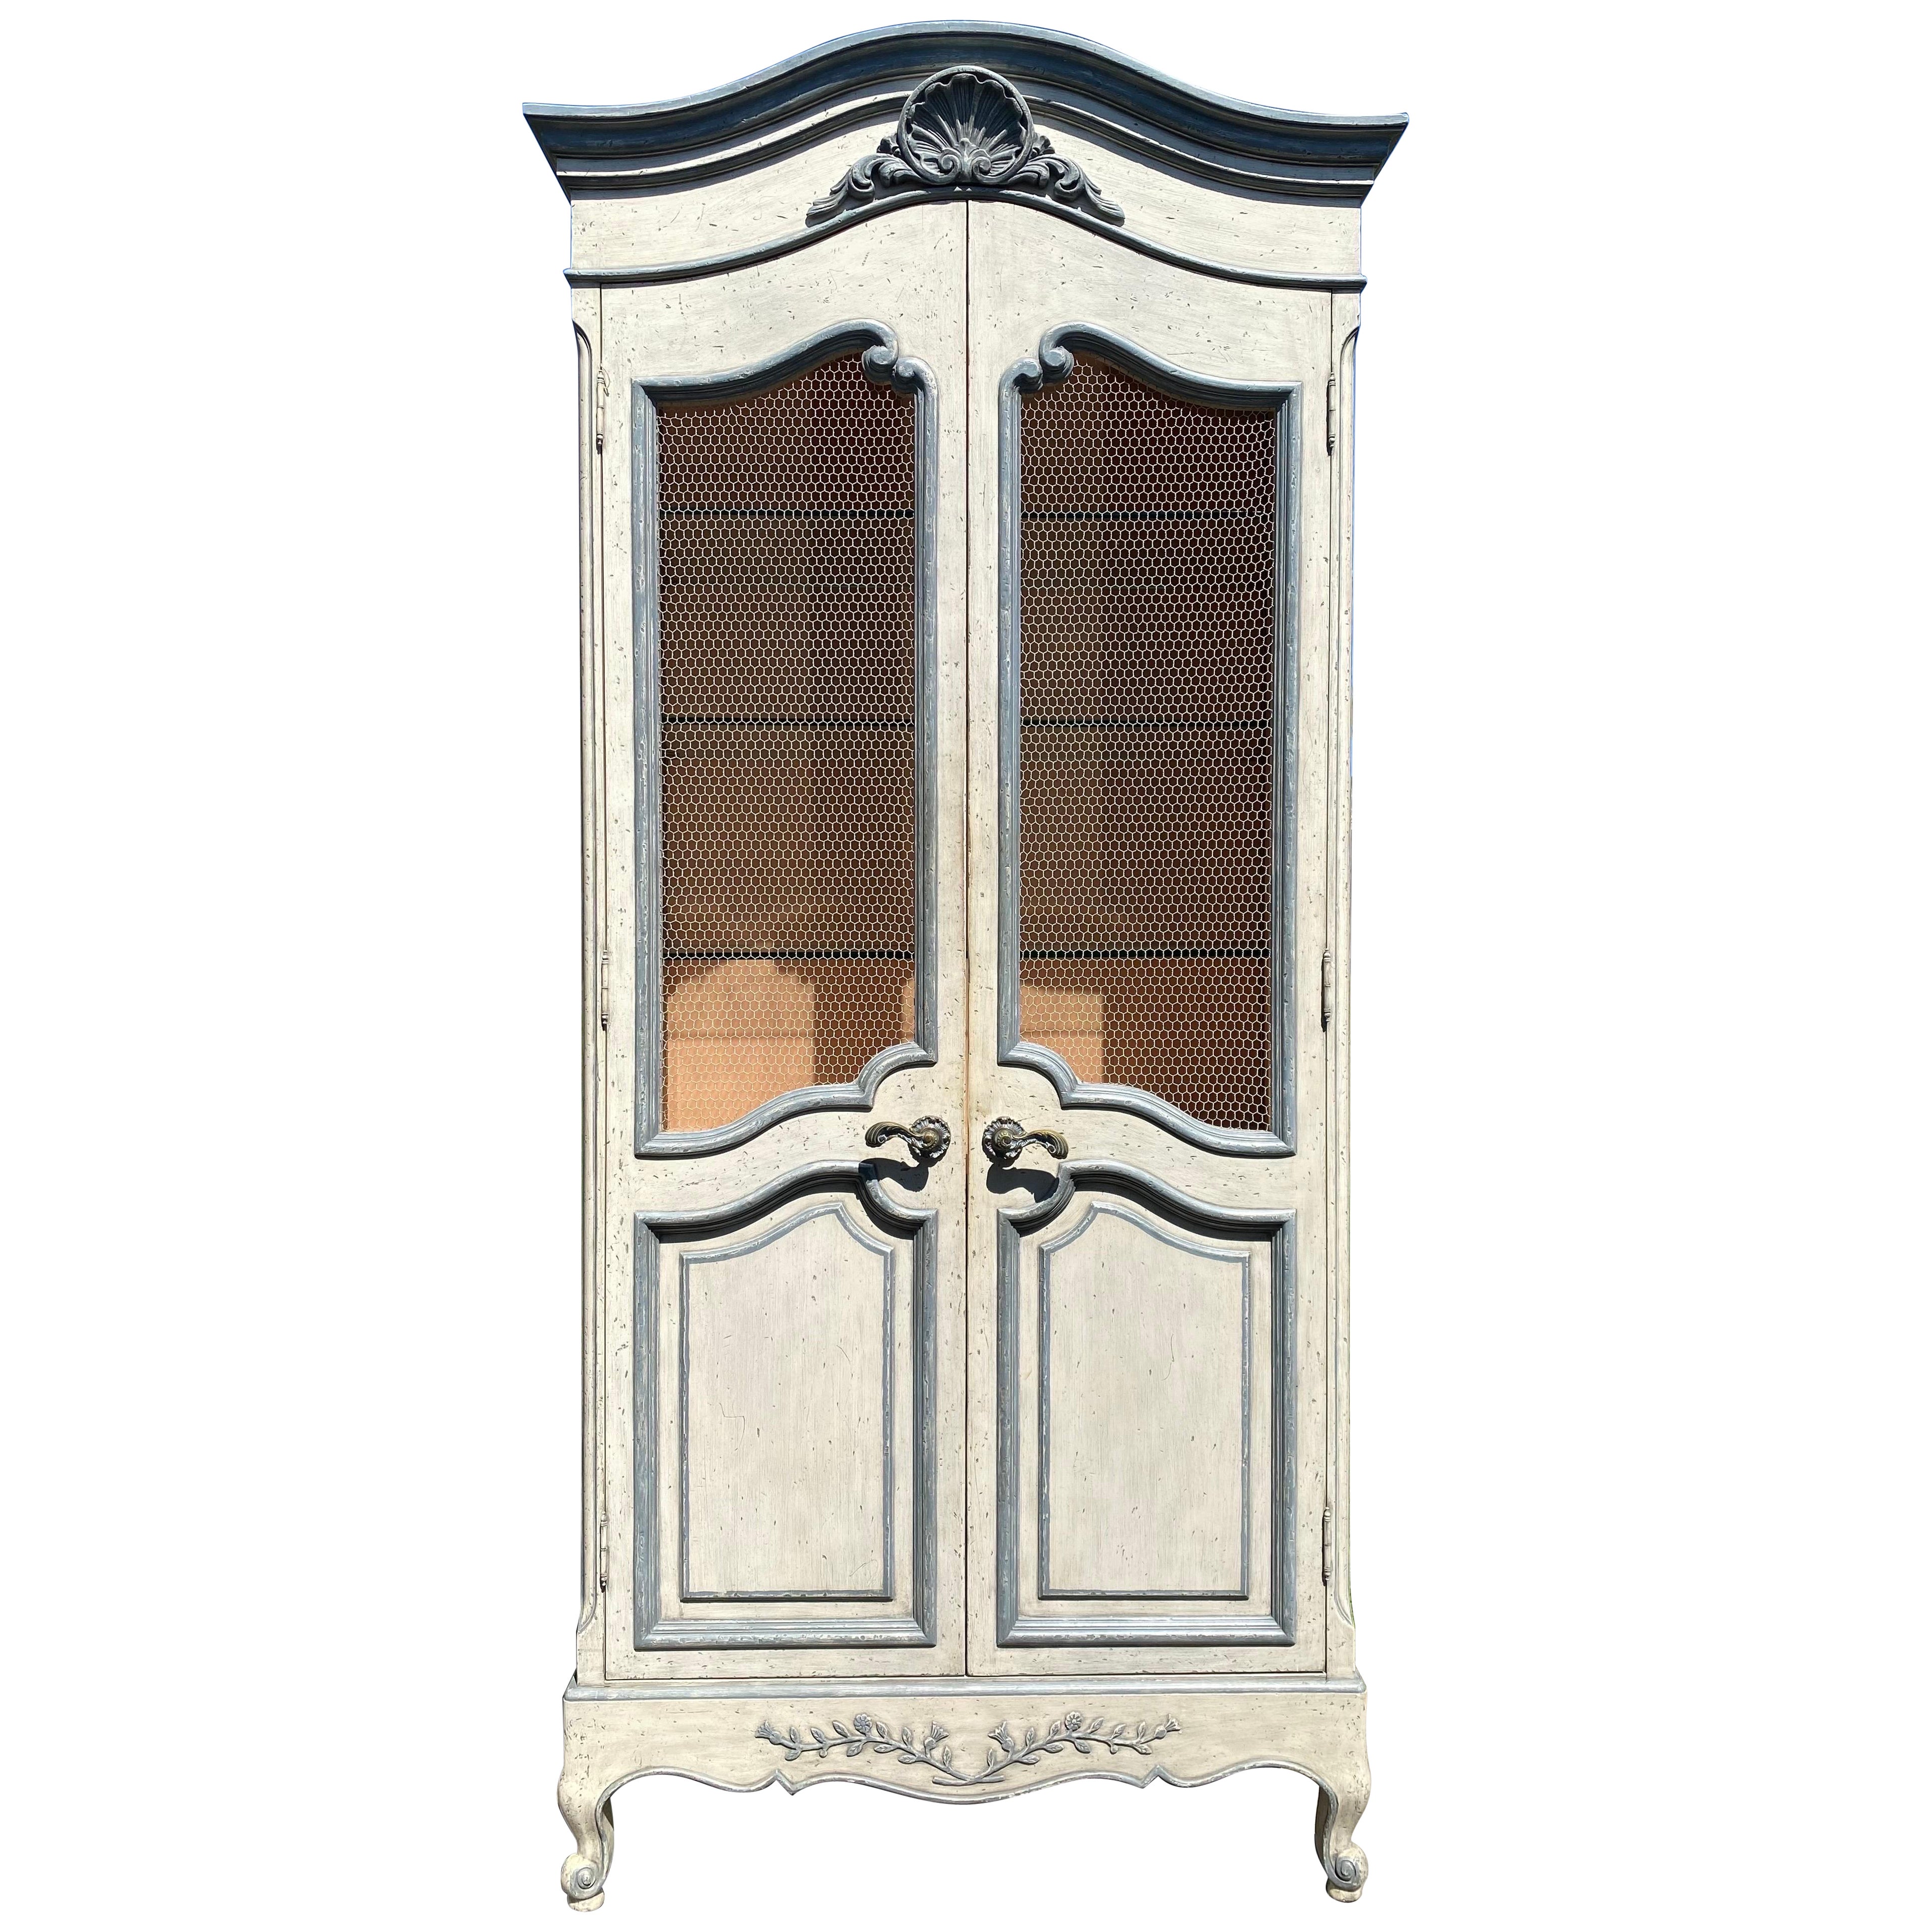 Mid century Vintage gustavian and Style armoire à deux portes after Drexel